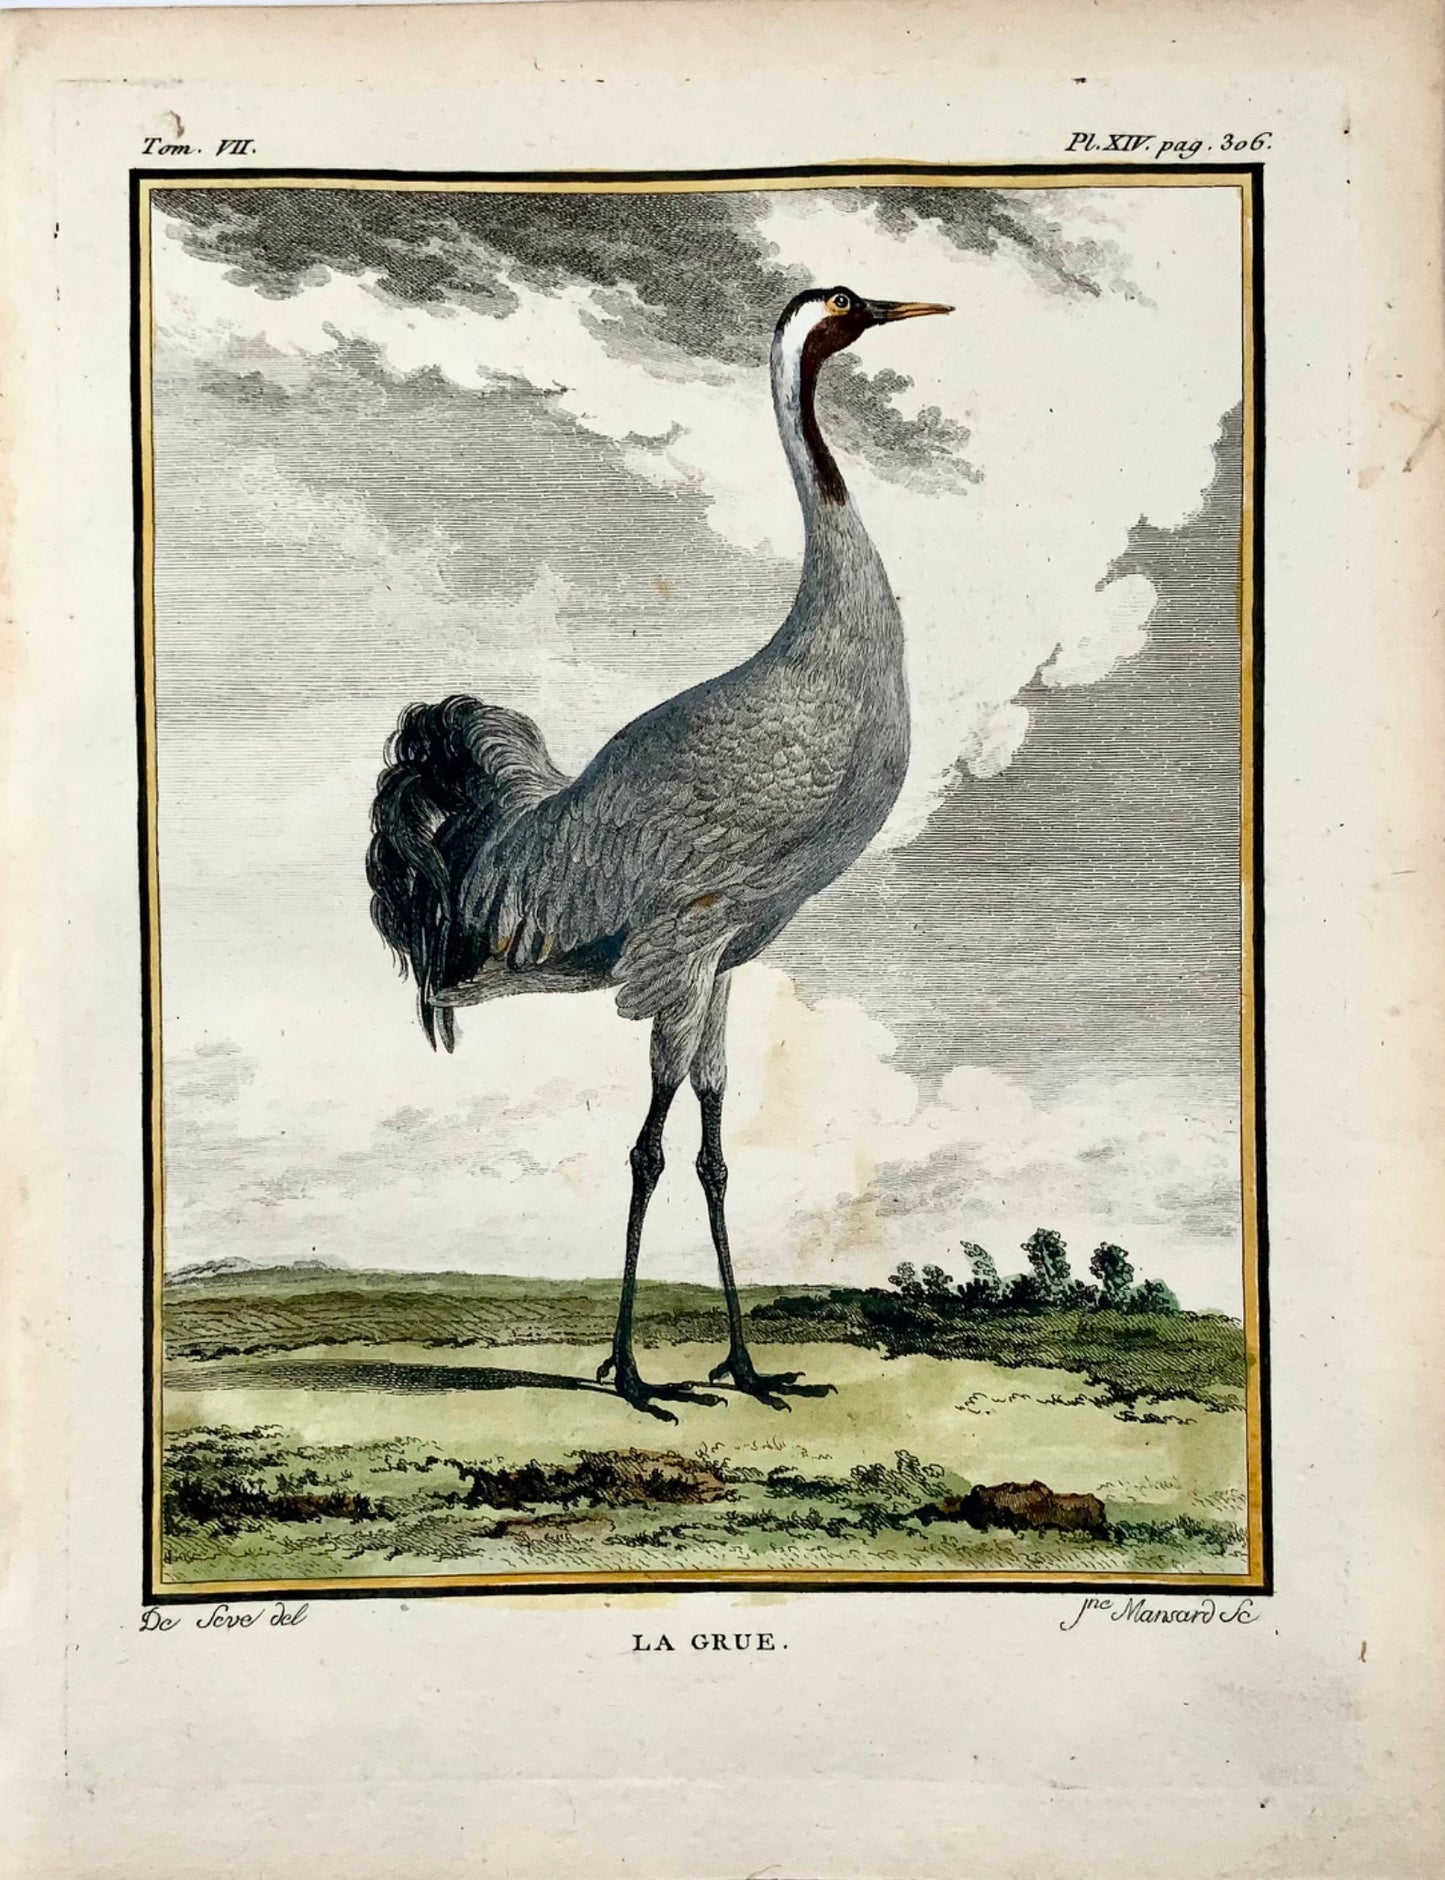 1779 Mansard after de Seve, Common Crane, ornithology, large 4to edition, engraving